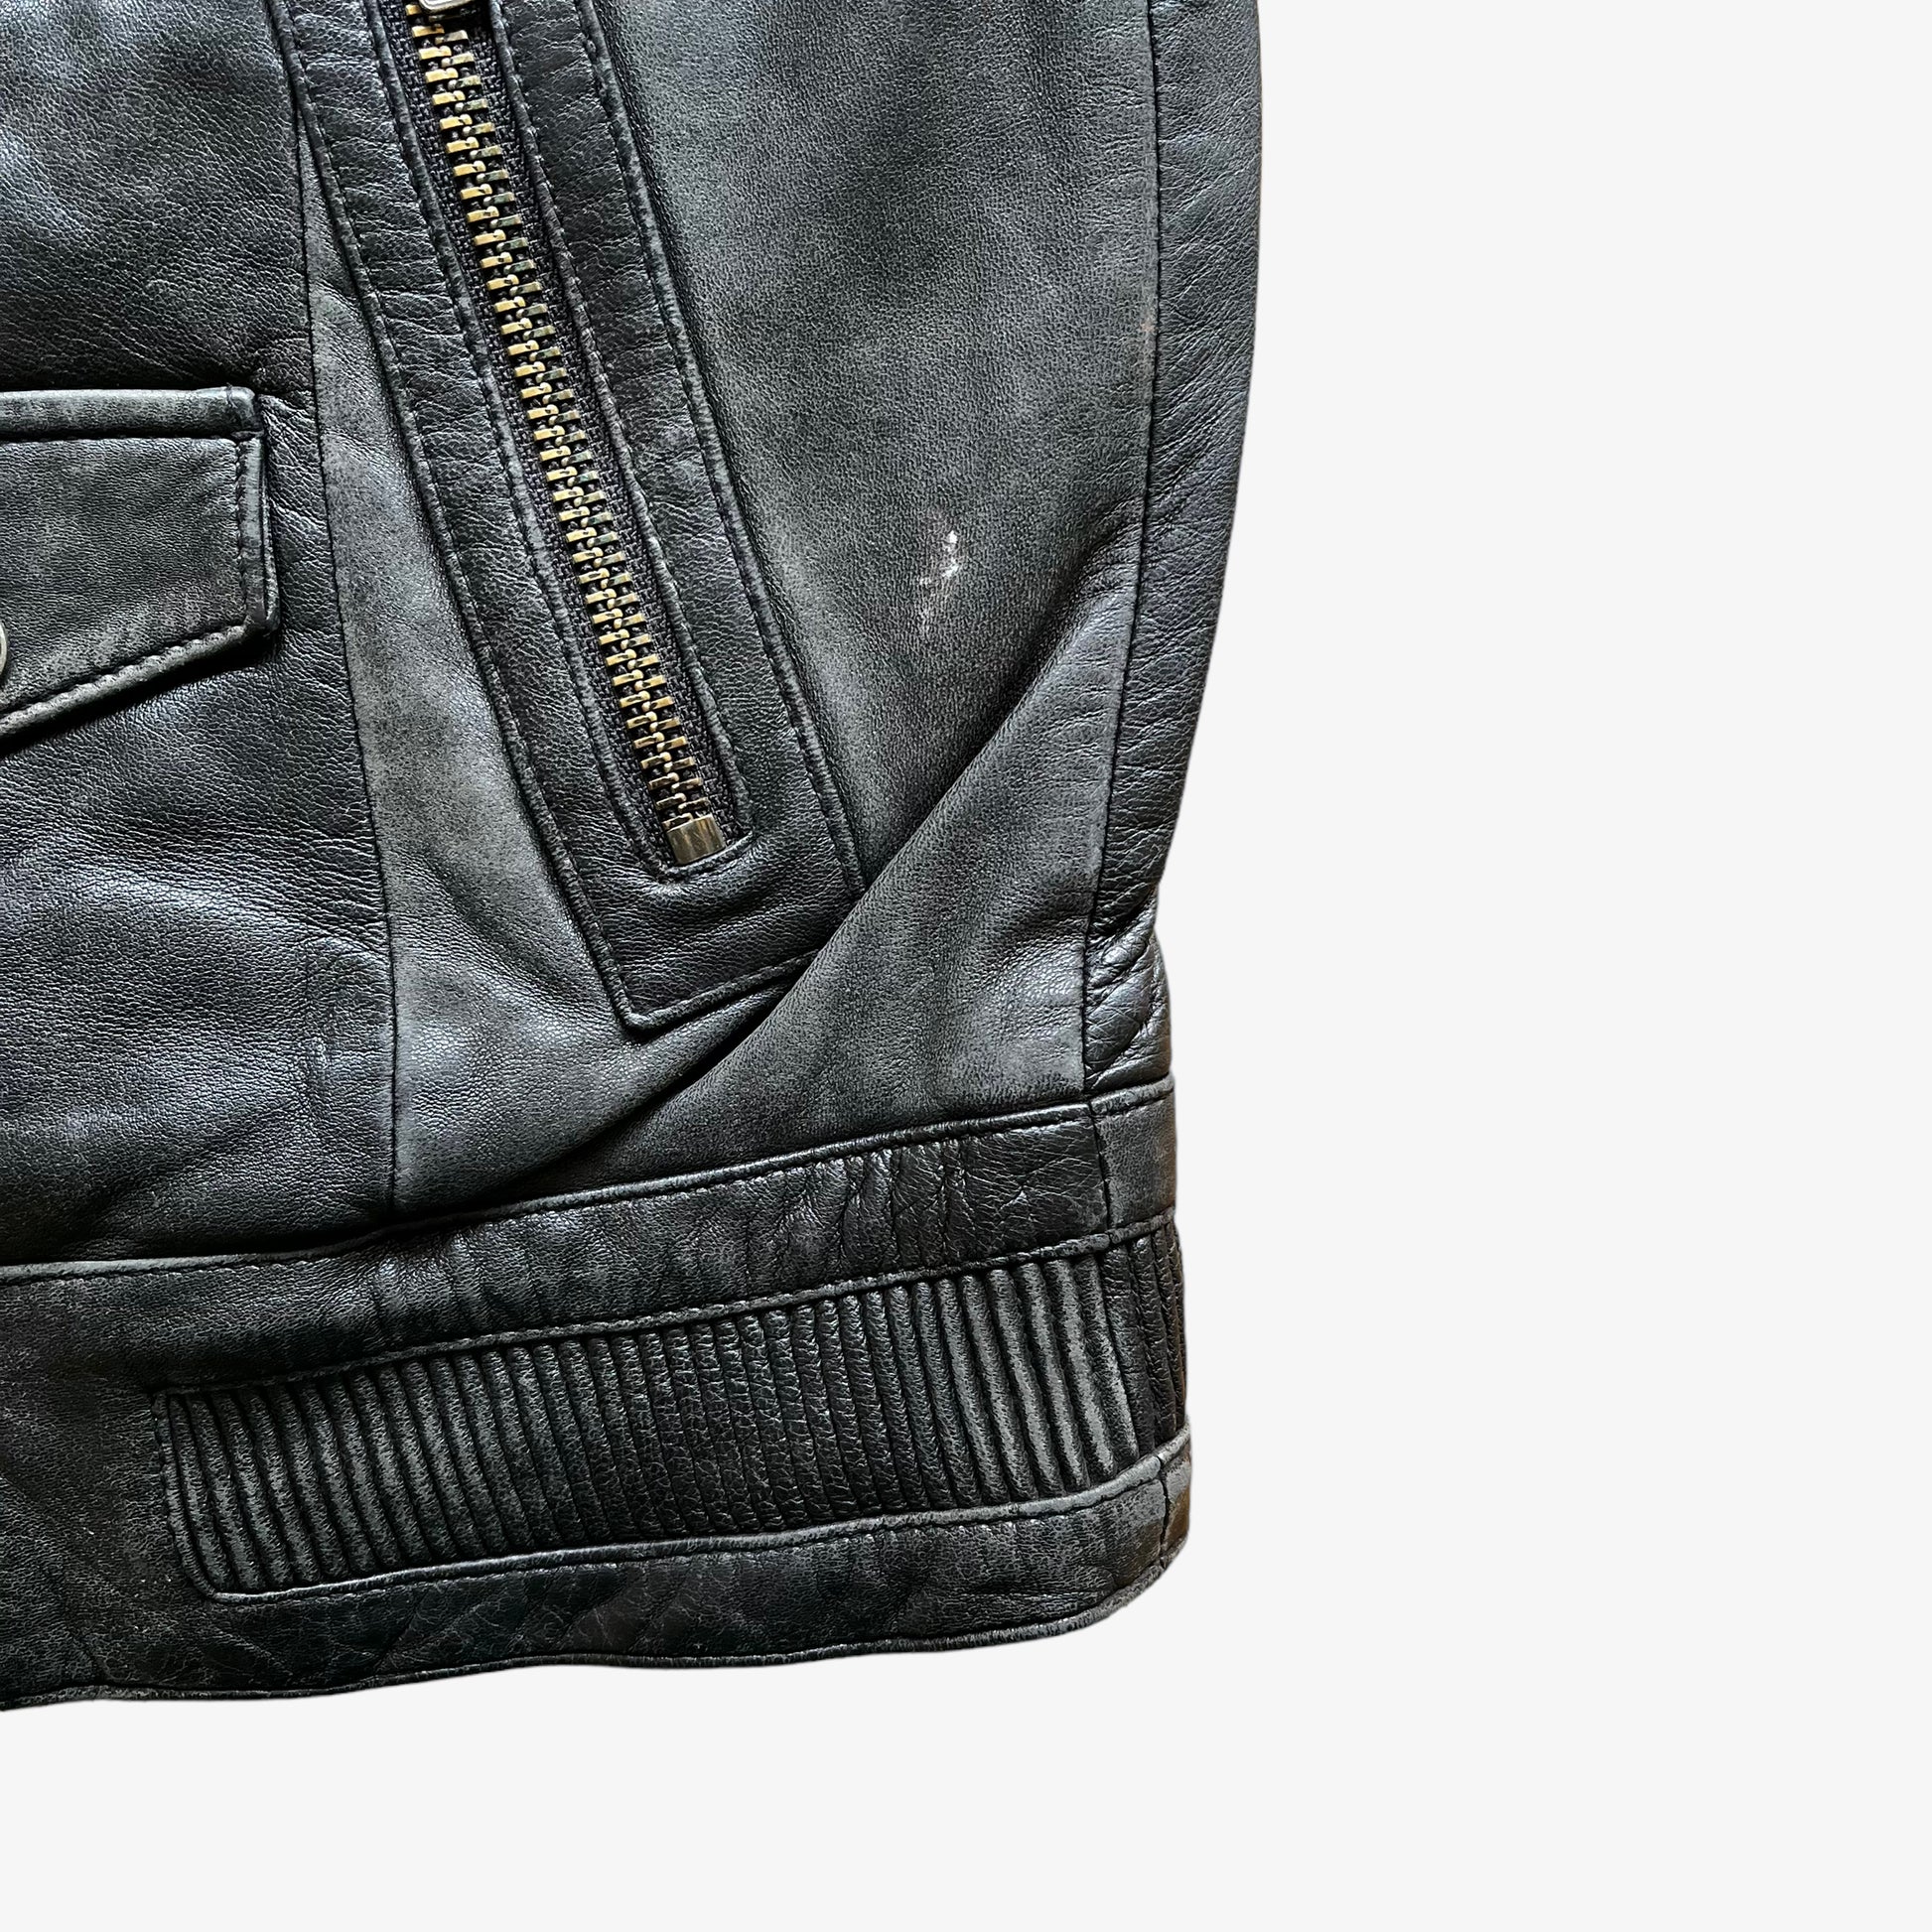 The Kooples Black Leather Driving Jacket Wear - Casspios Dream